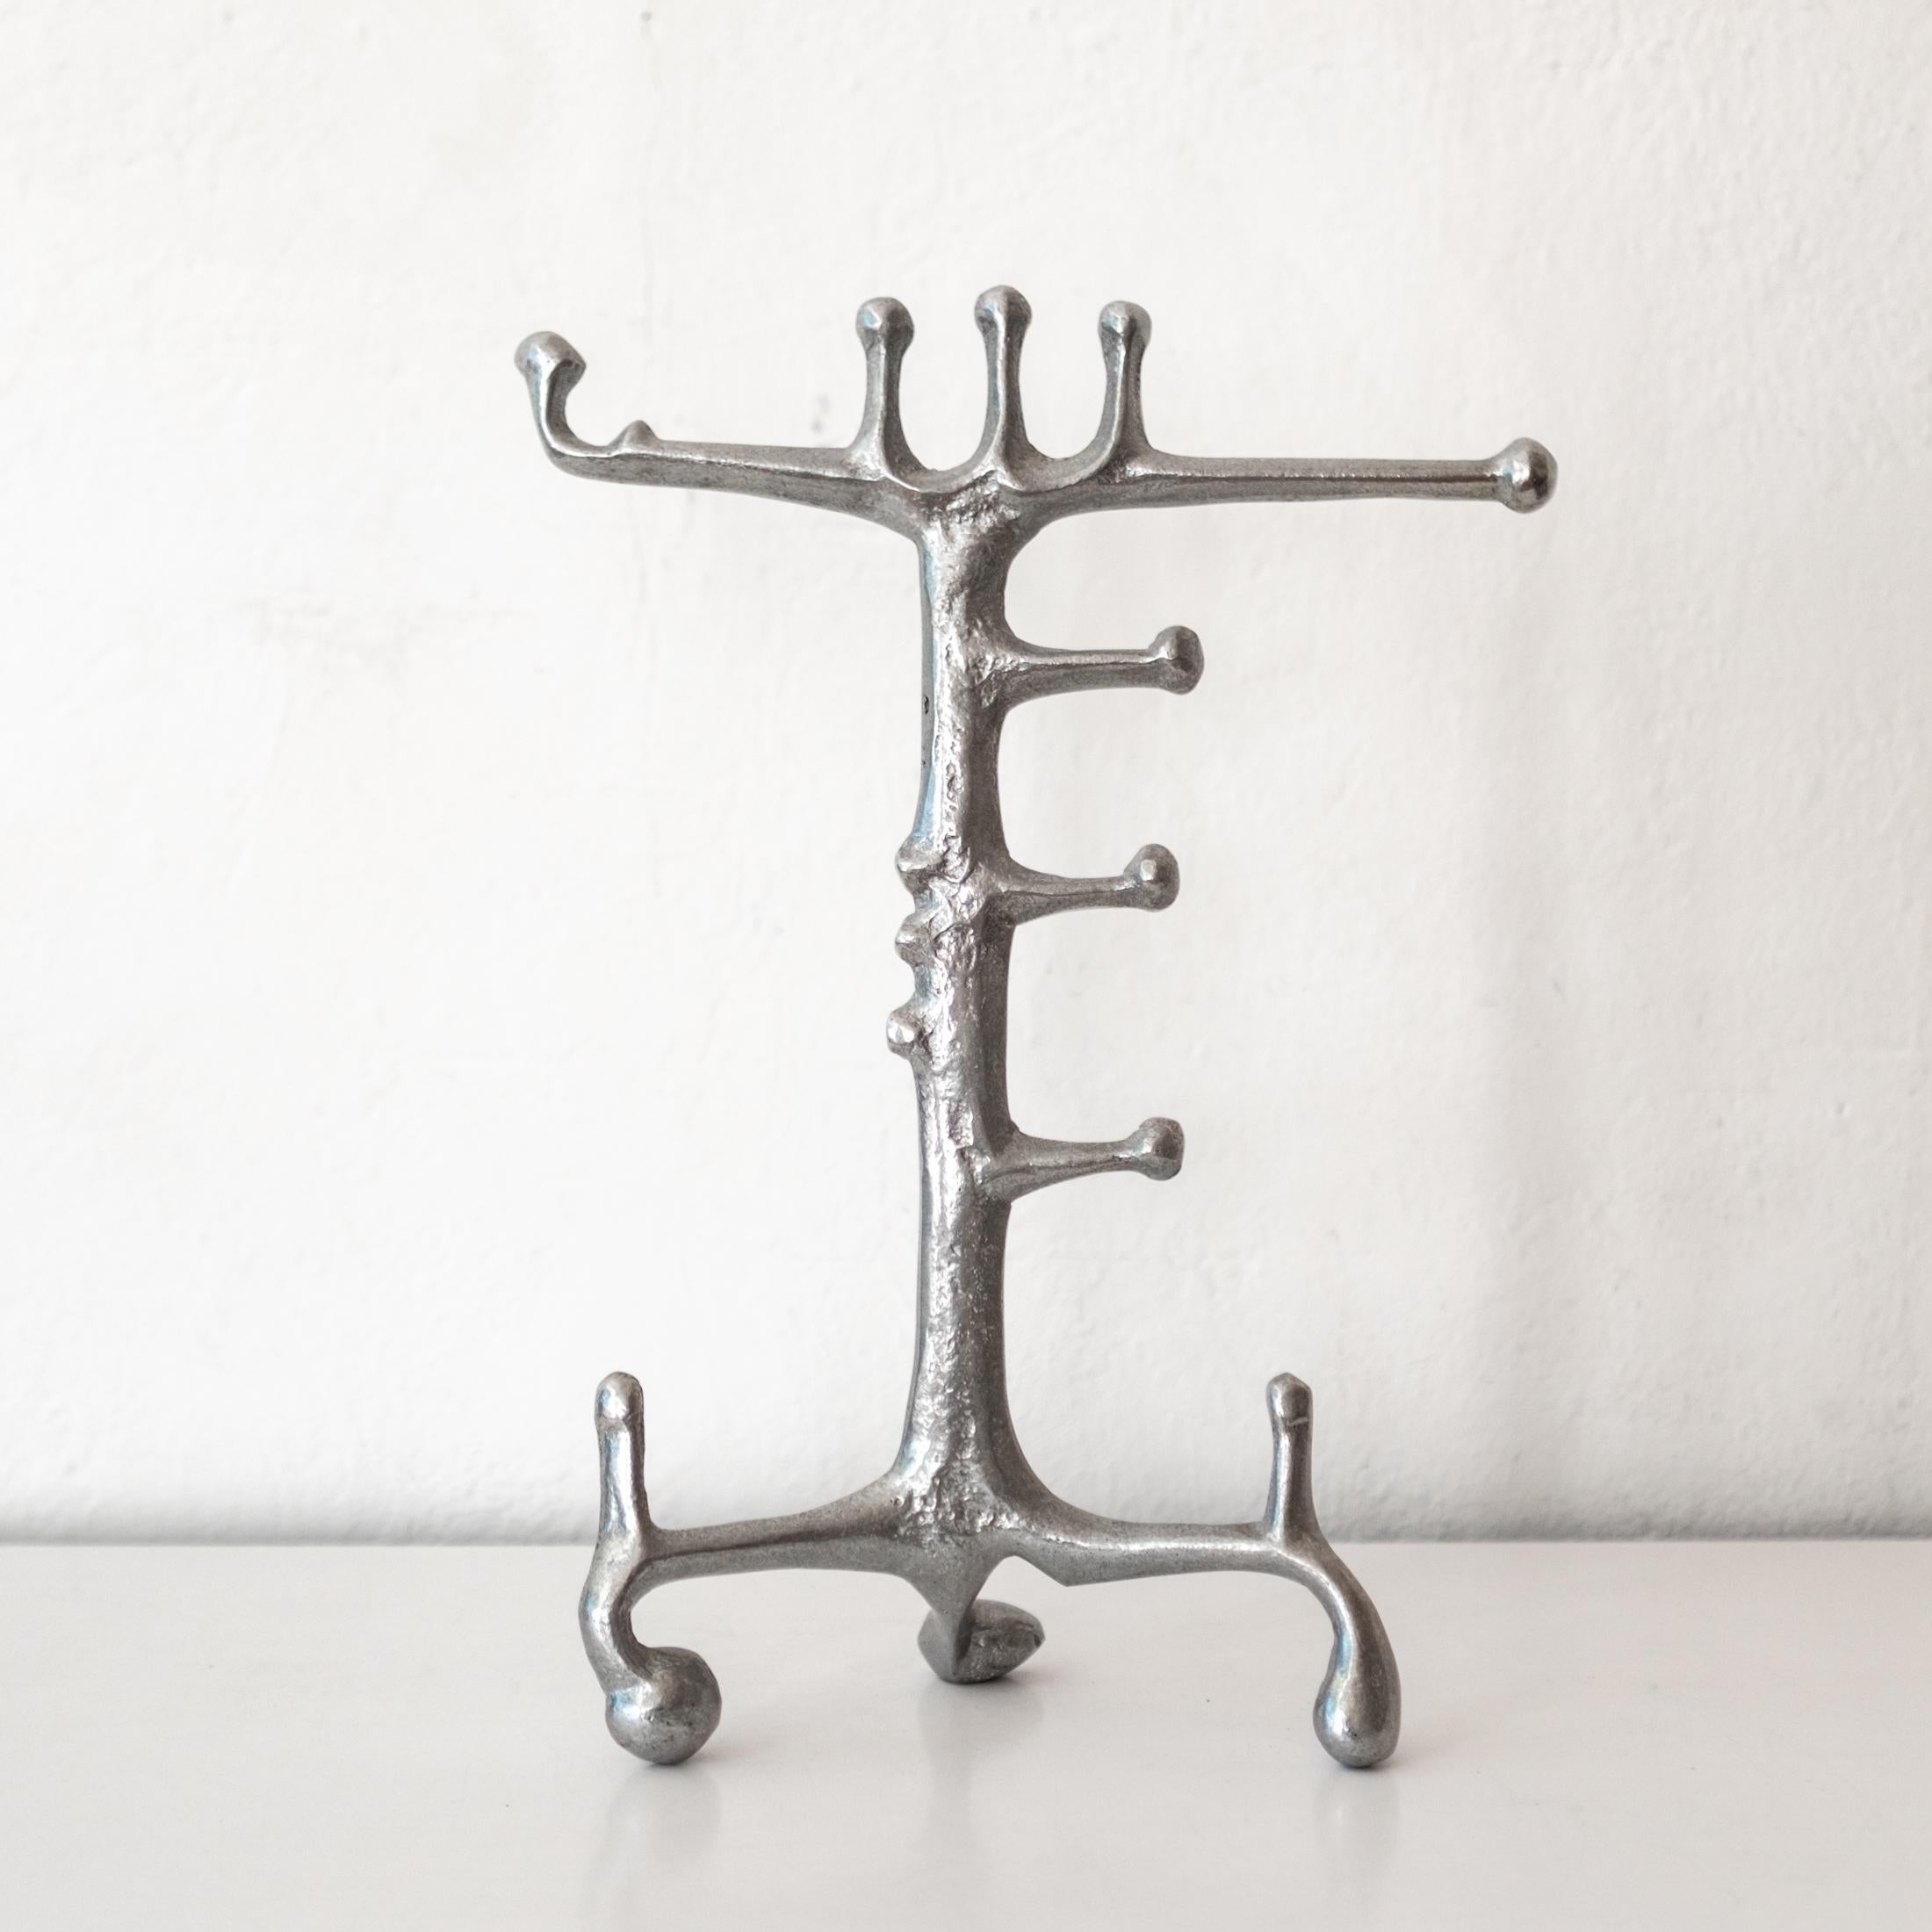 Organic aluminum sculptural jewelry stand by American artist, Donald Drumm.